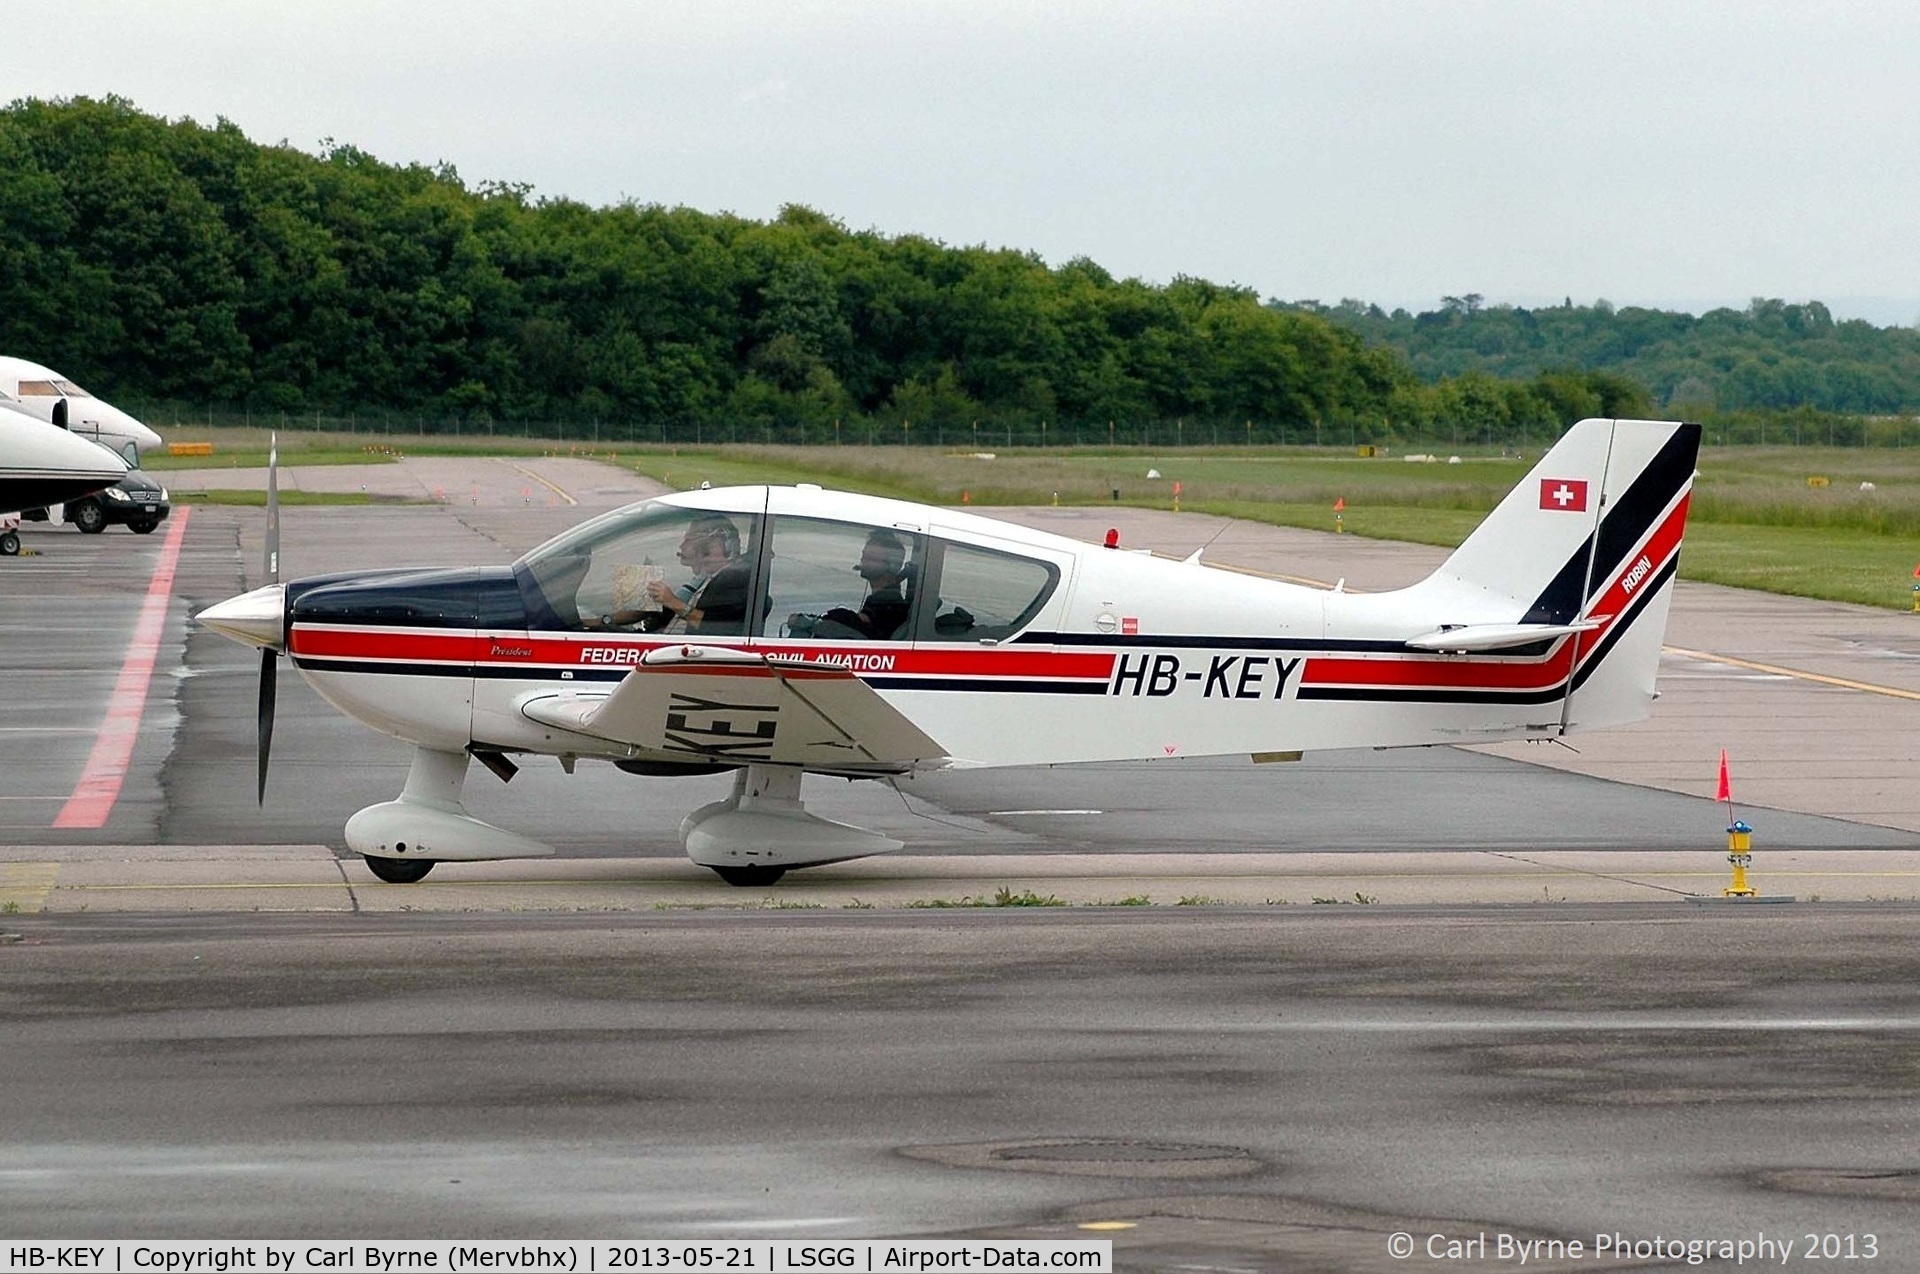 HB-KEY, 1998 Robin DR-400-500 President C/N 11, Taken from the Aerobistro.